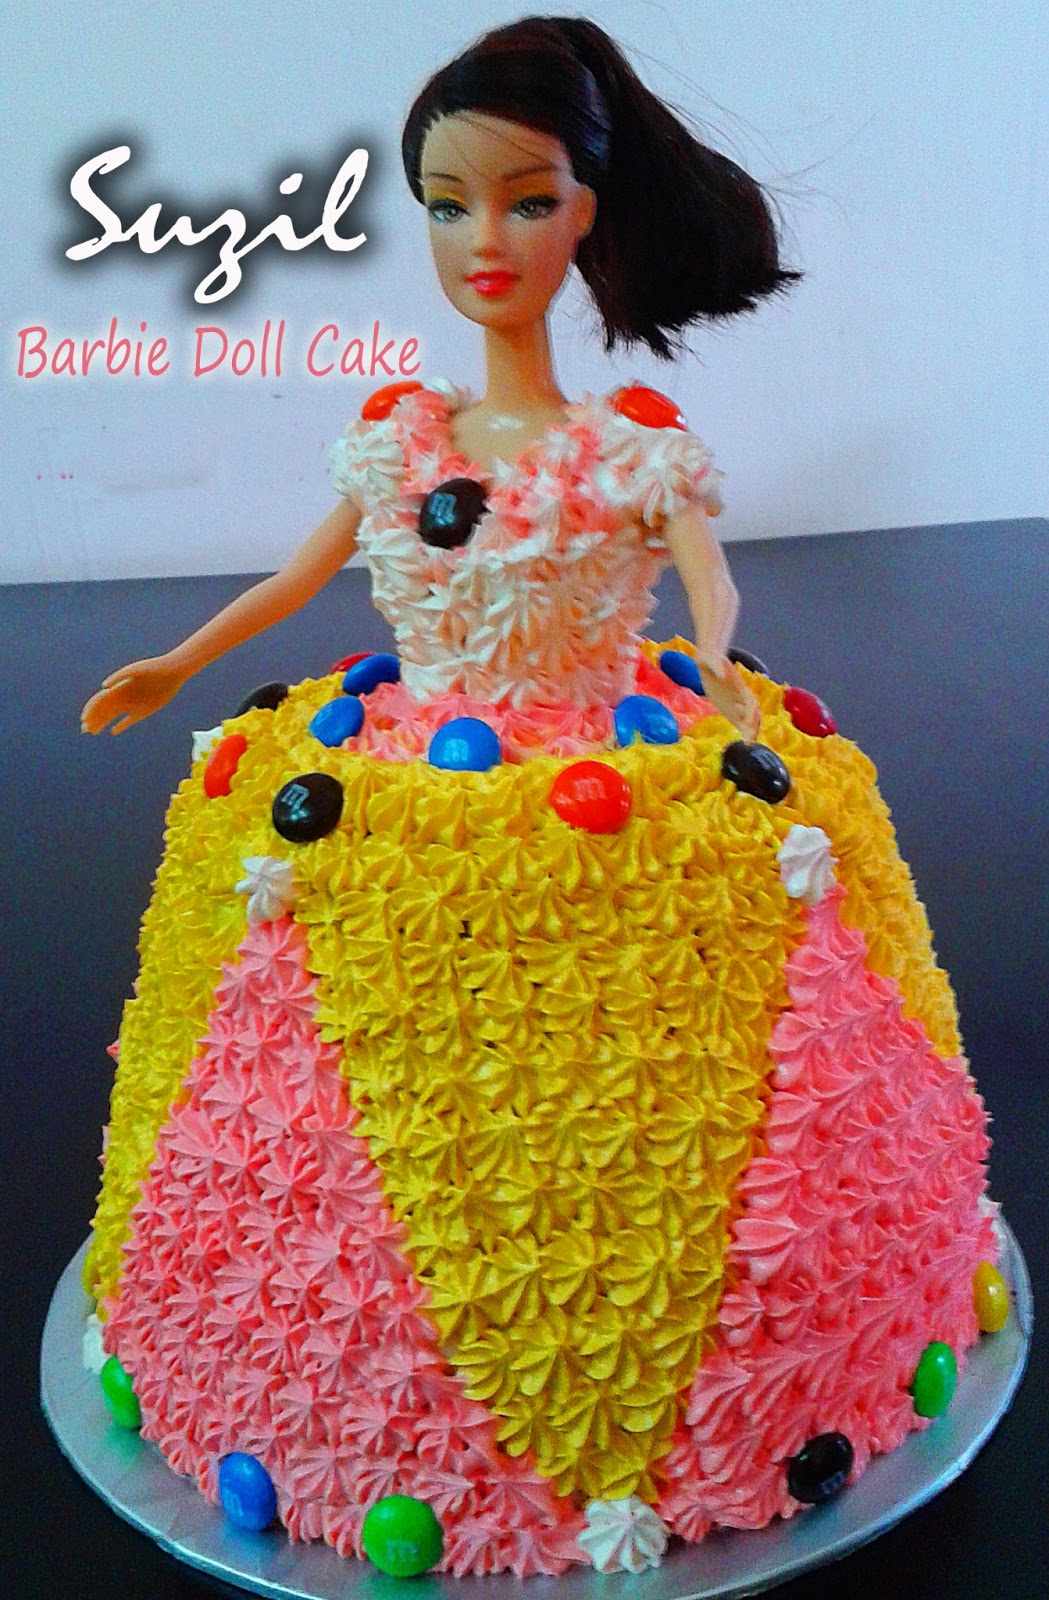 Kedai roti dan kek kluang: BARBIE DOLL CAKE